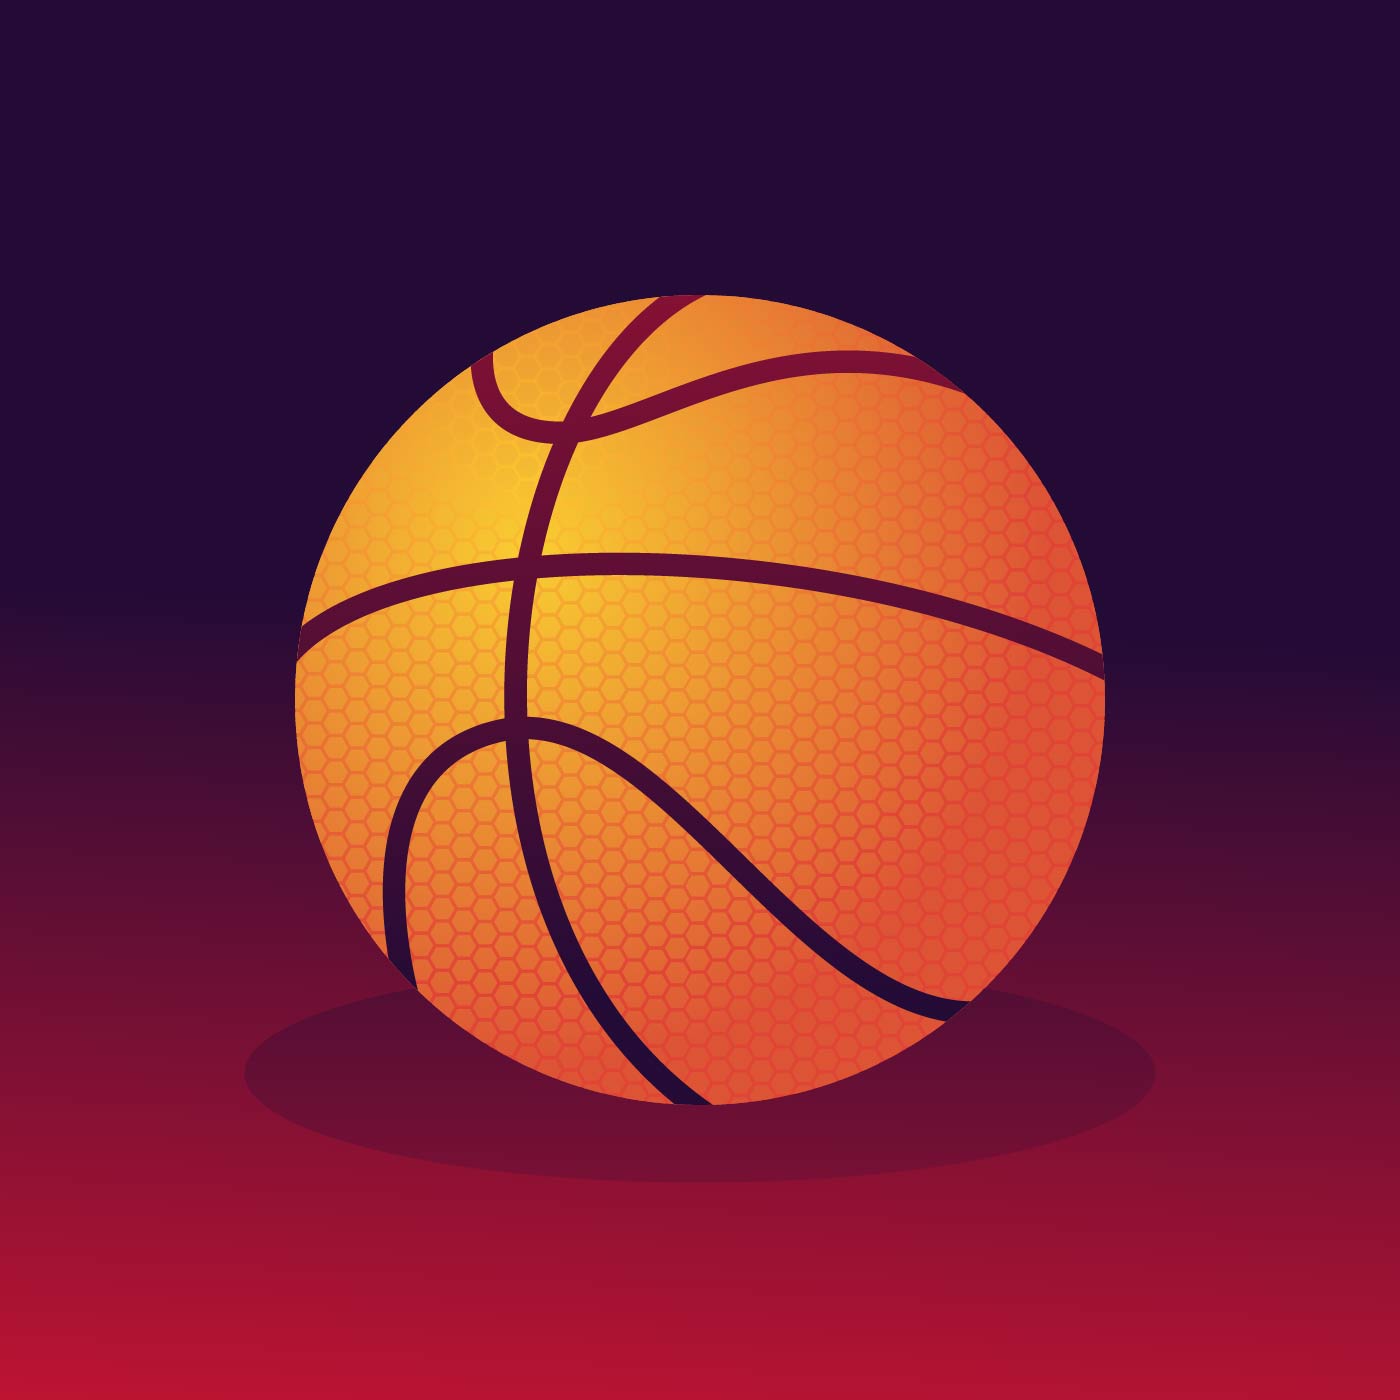 Realistic Basketball - Download Free Vectors, Clipart ...